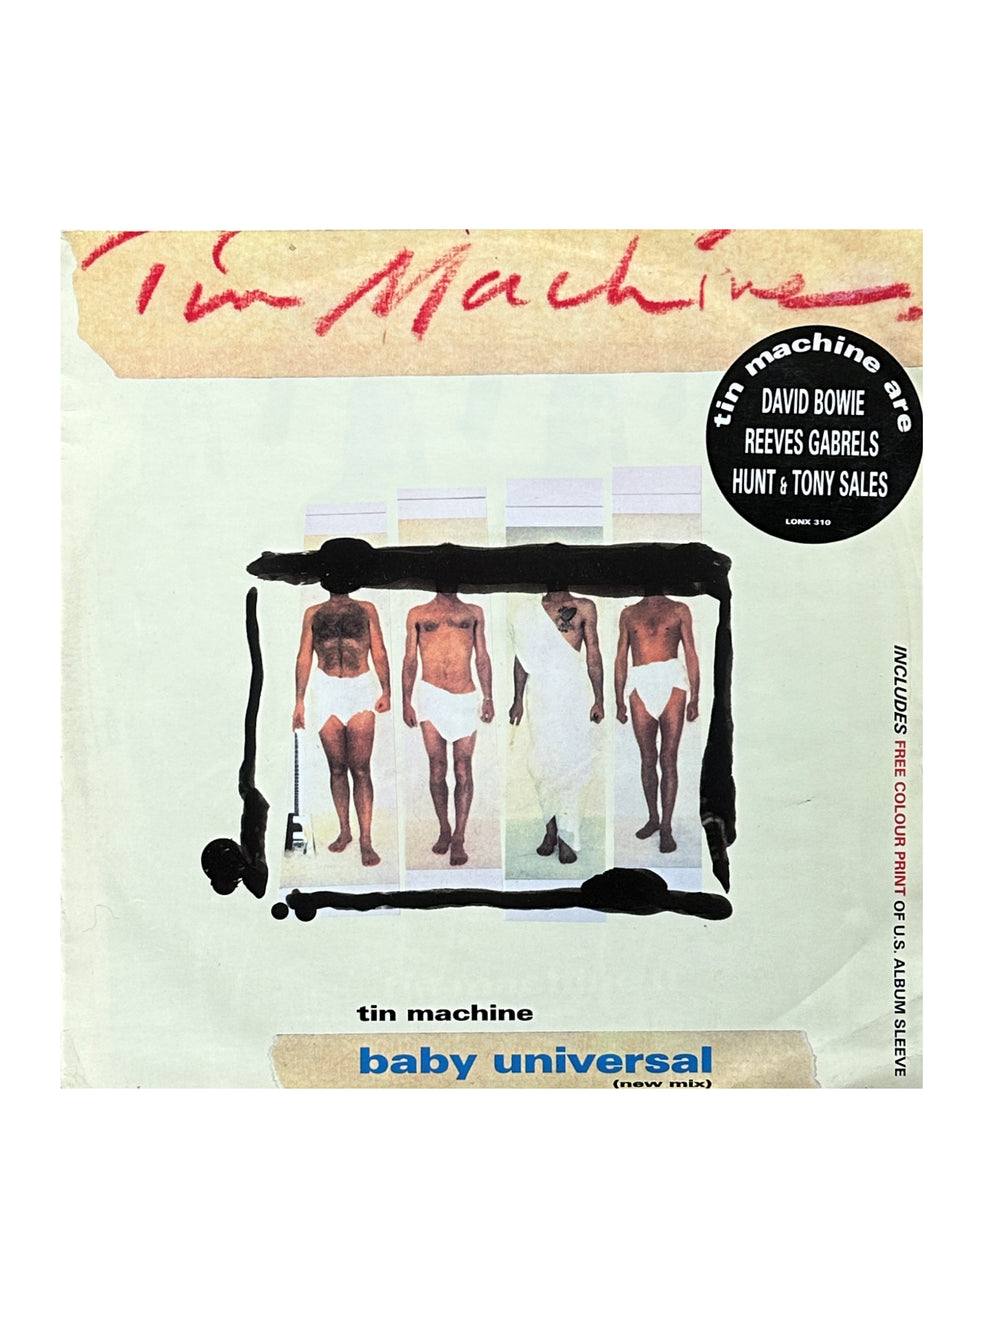 David Bowie - Tin Machine Baby Universal 12" Vinyl UK Inc Poster Preloved:1991